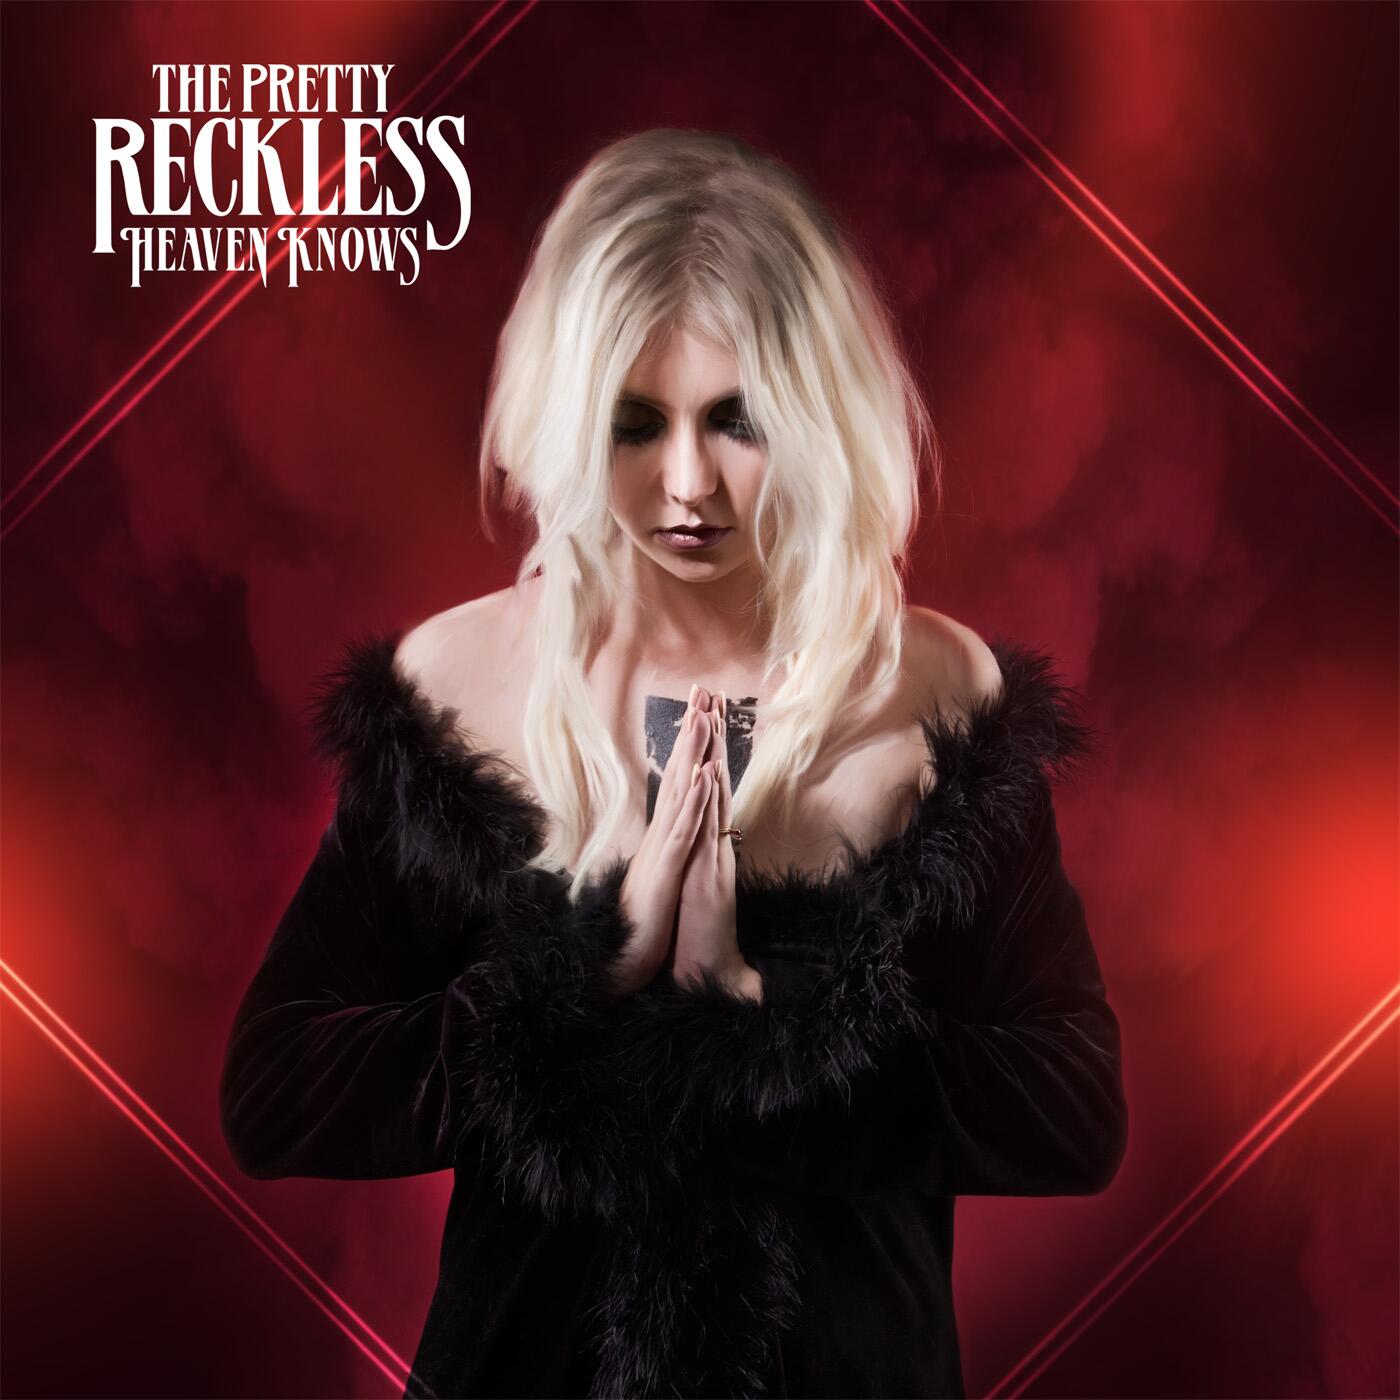 The Pretty Reckless >> álbum "Going to Hell" - Página 6 BZDNZ5tCcAAs9bj